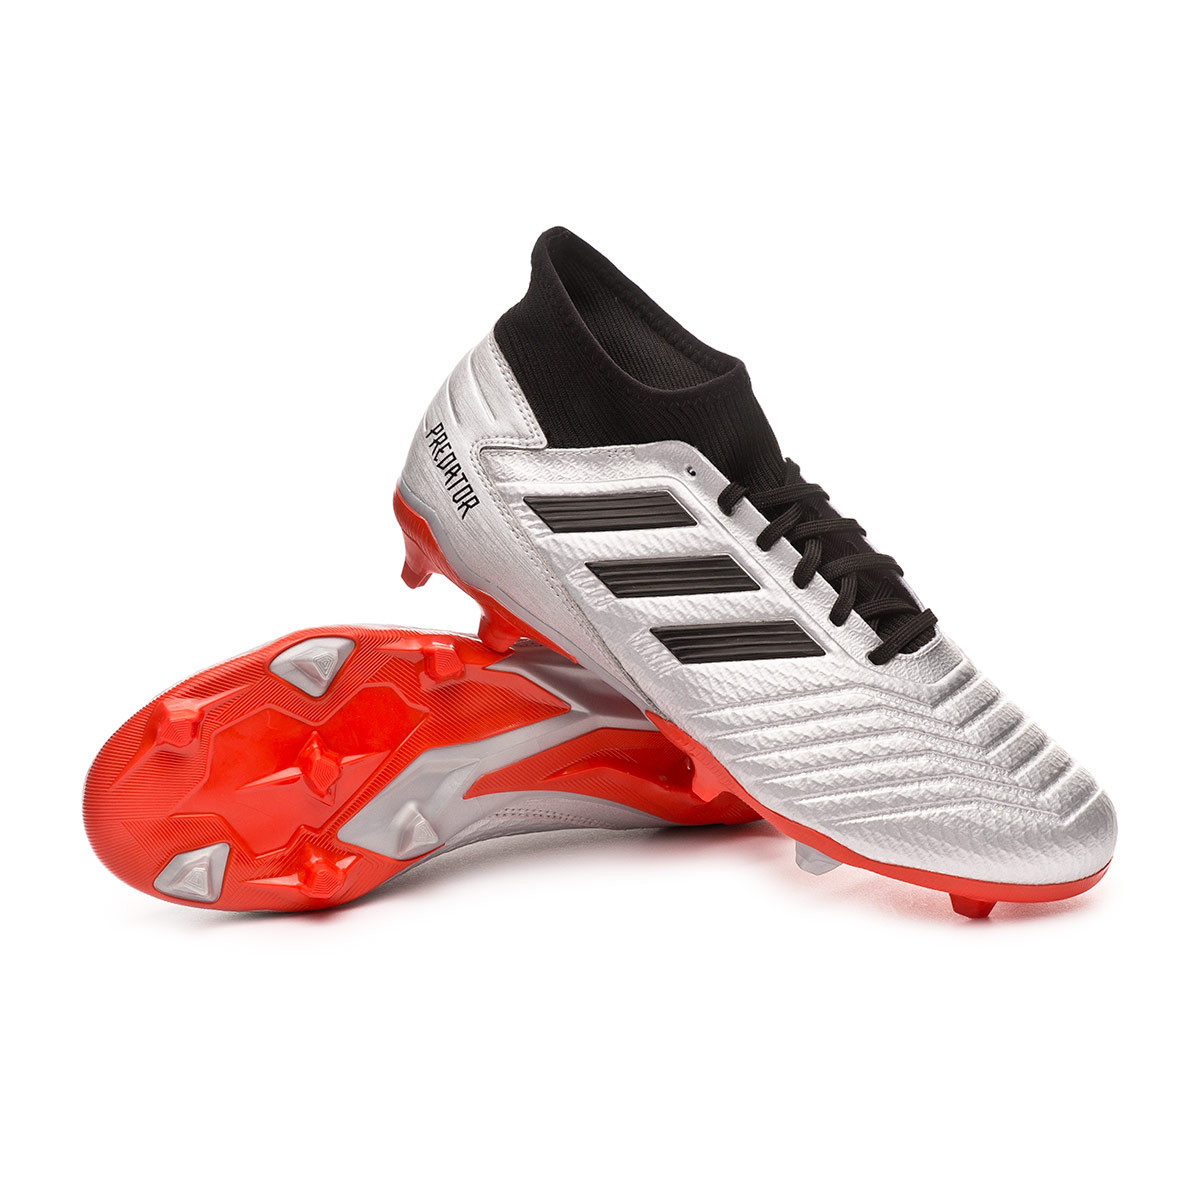 Football Boots adidas Predator 19.3 FG Silver metallic-Core black-Hi red -  Football store Fútbol Emotion